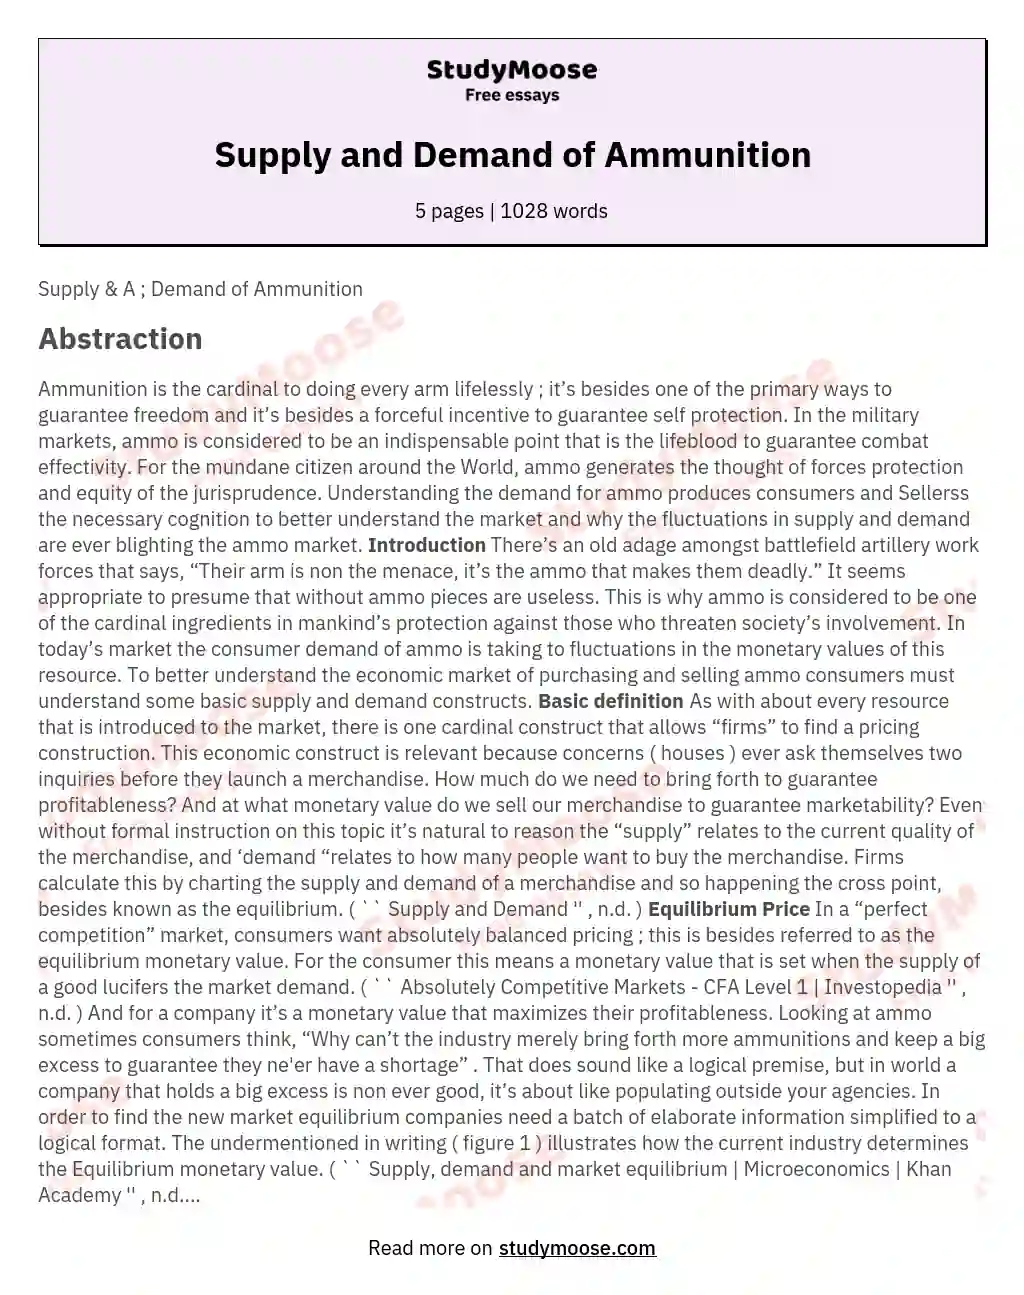 Supply and Demand of Ammunition essay